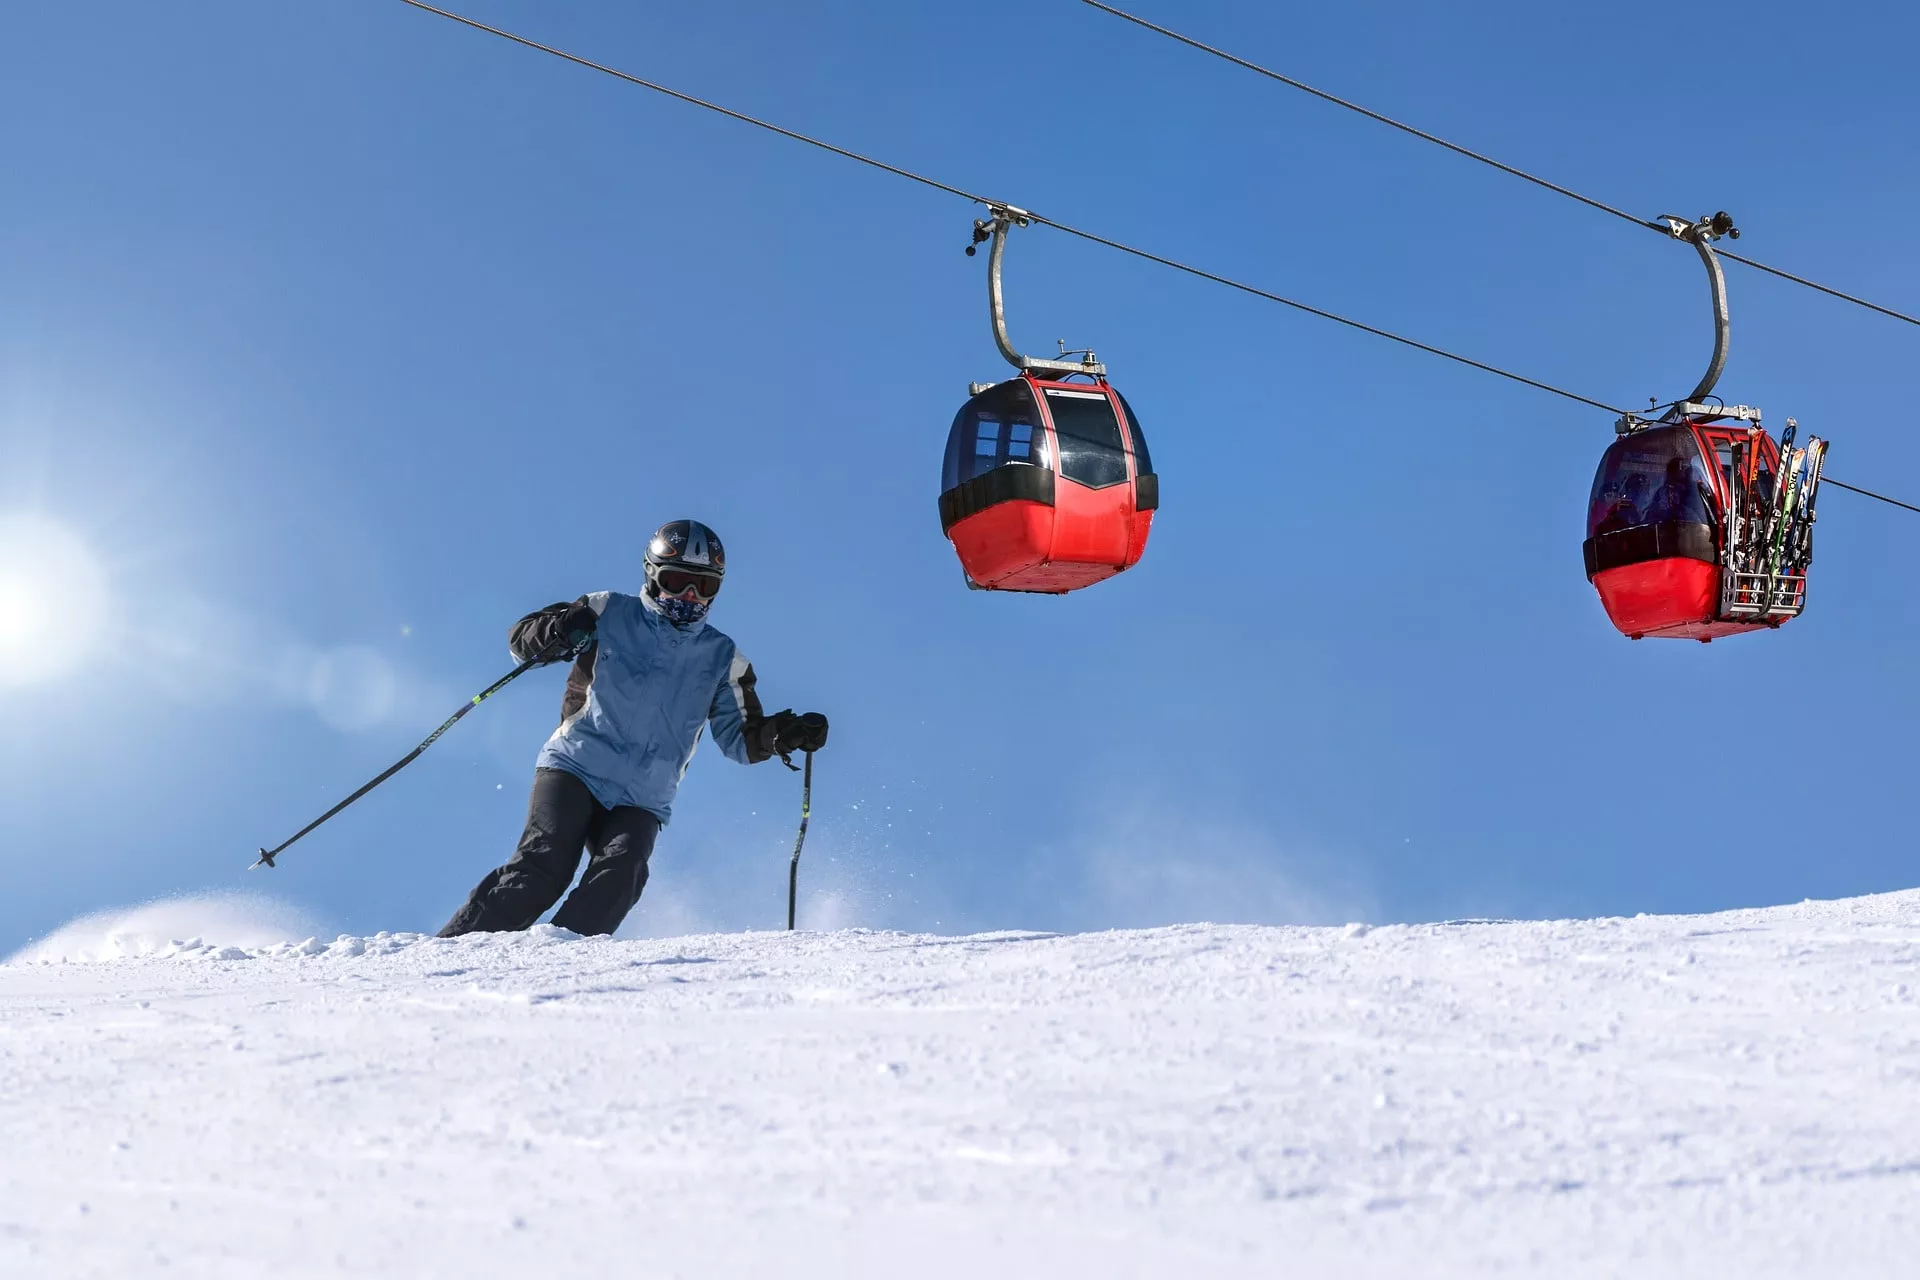 Saklikent Ski Resort in Turkey, Central Asia | Snowboarding,Skiing - Rated 3.7